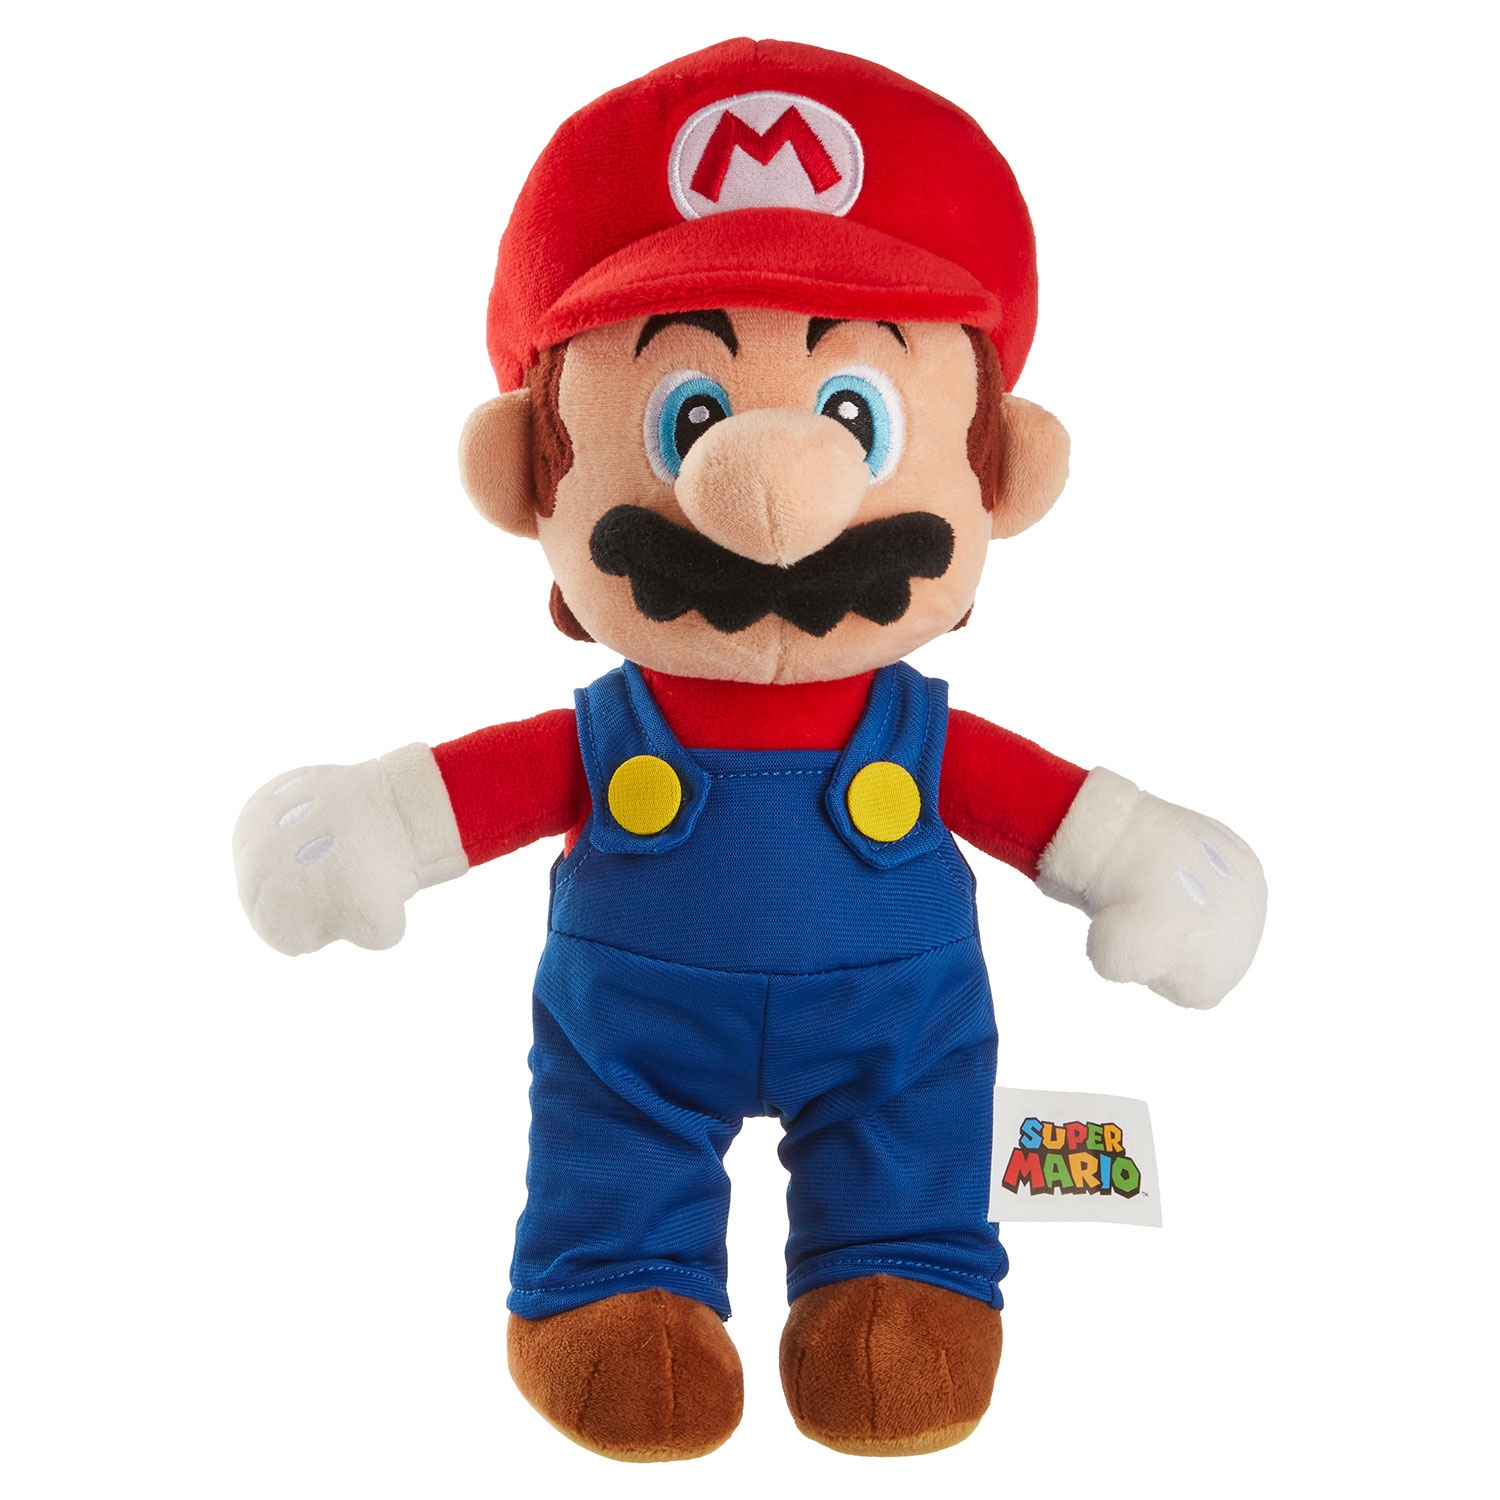 Super-Mario-Plüschfigur